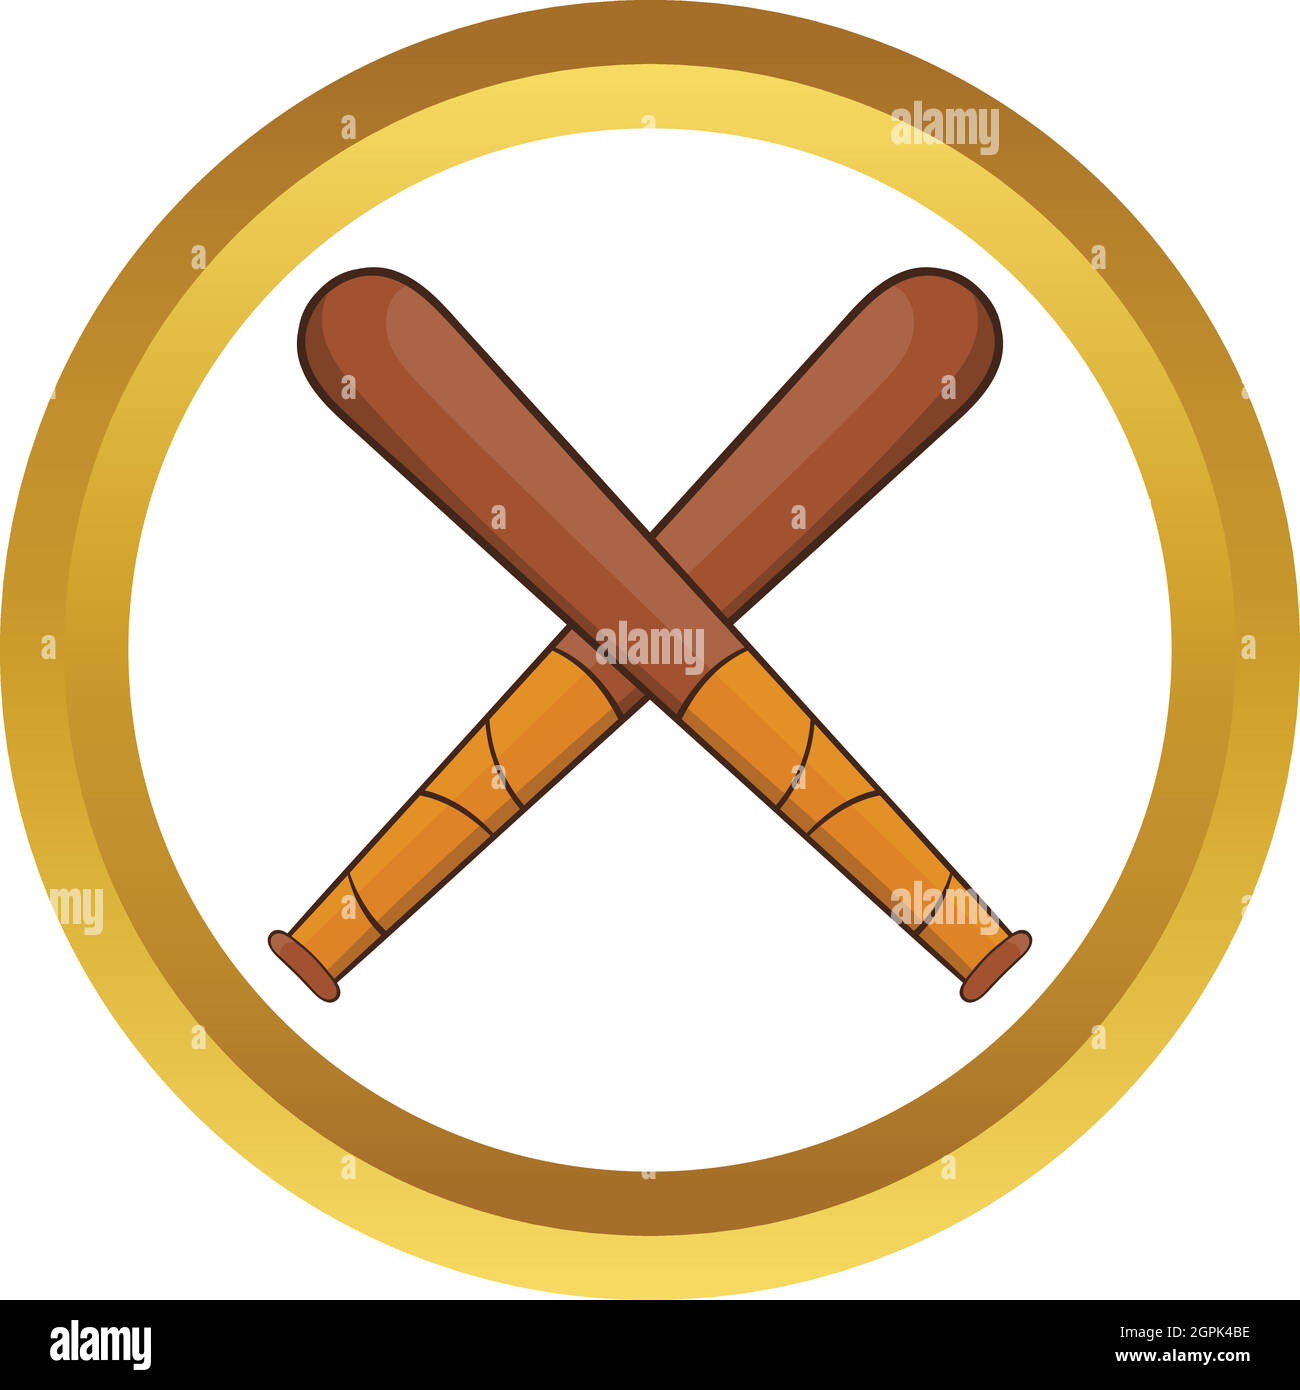 Crossed baseball bats vector icon Stock Vector